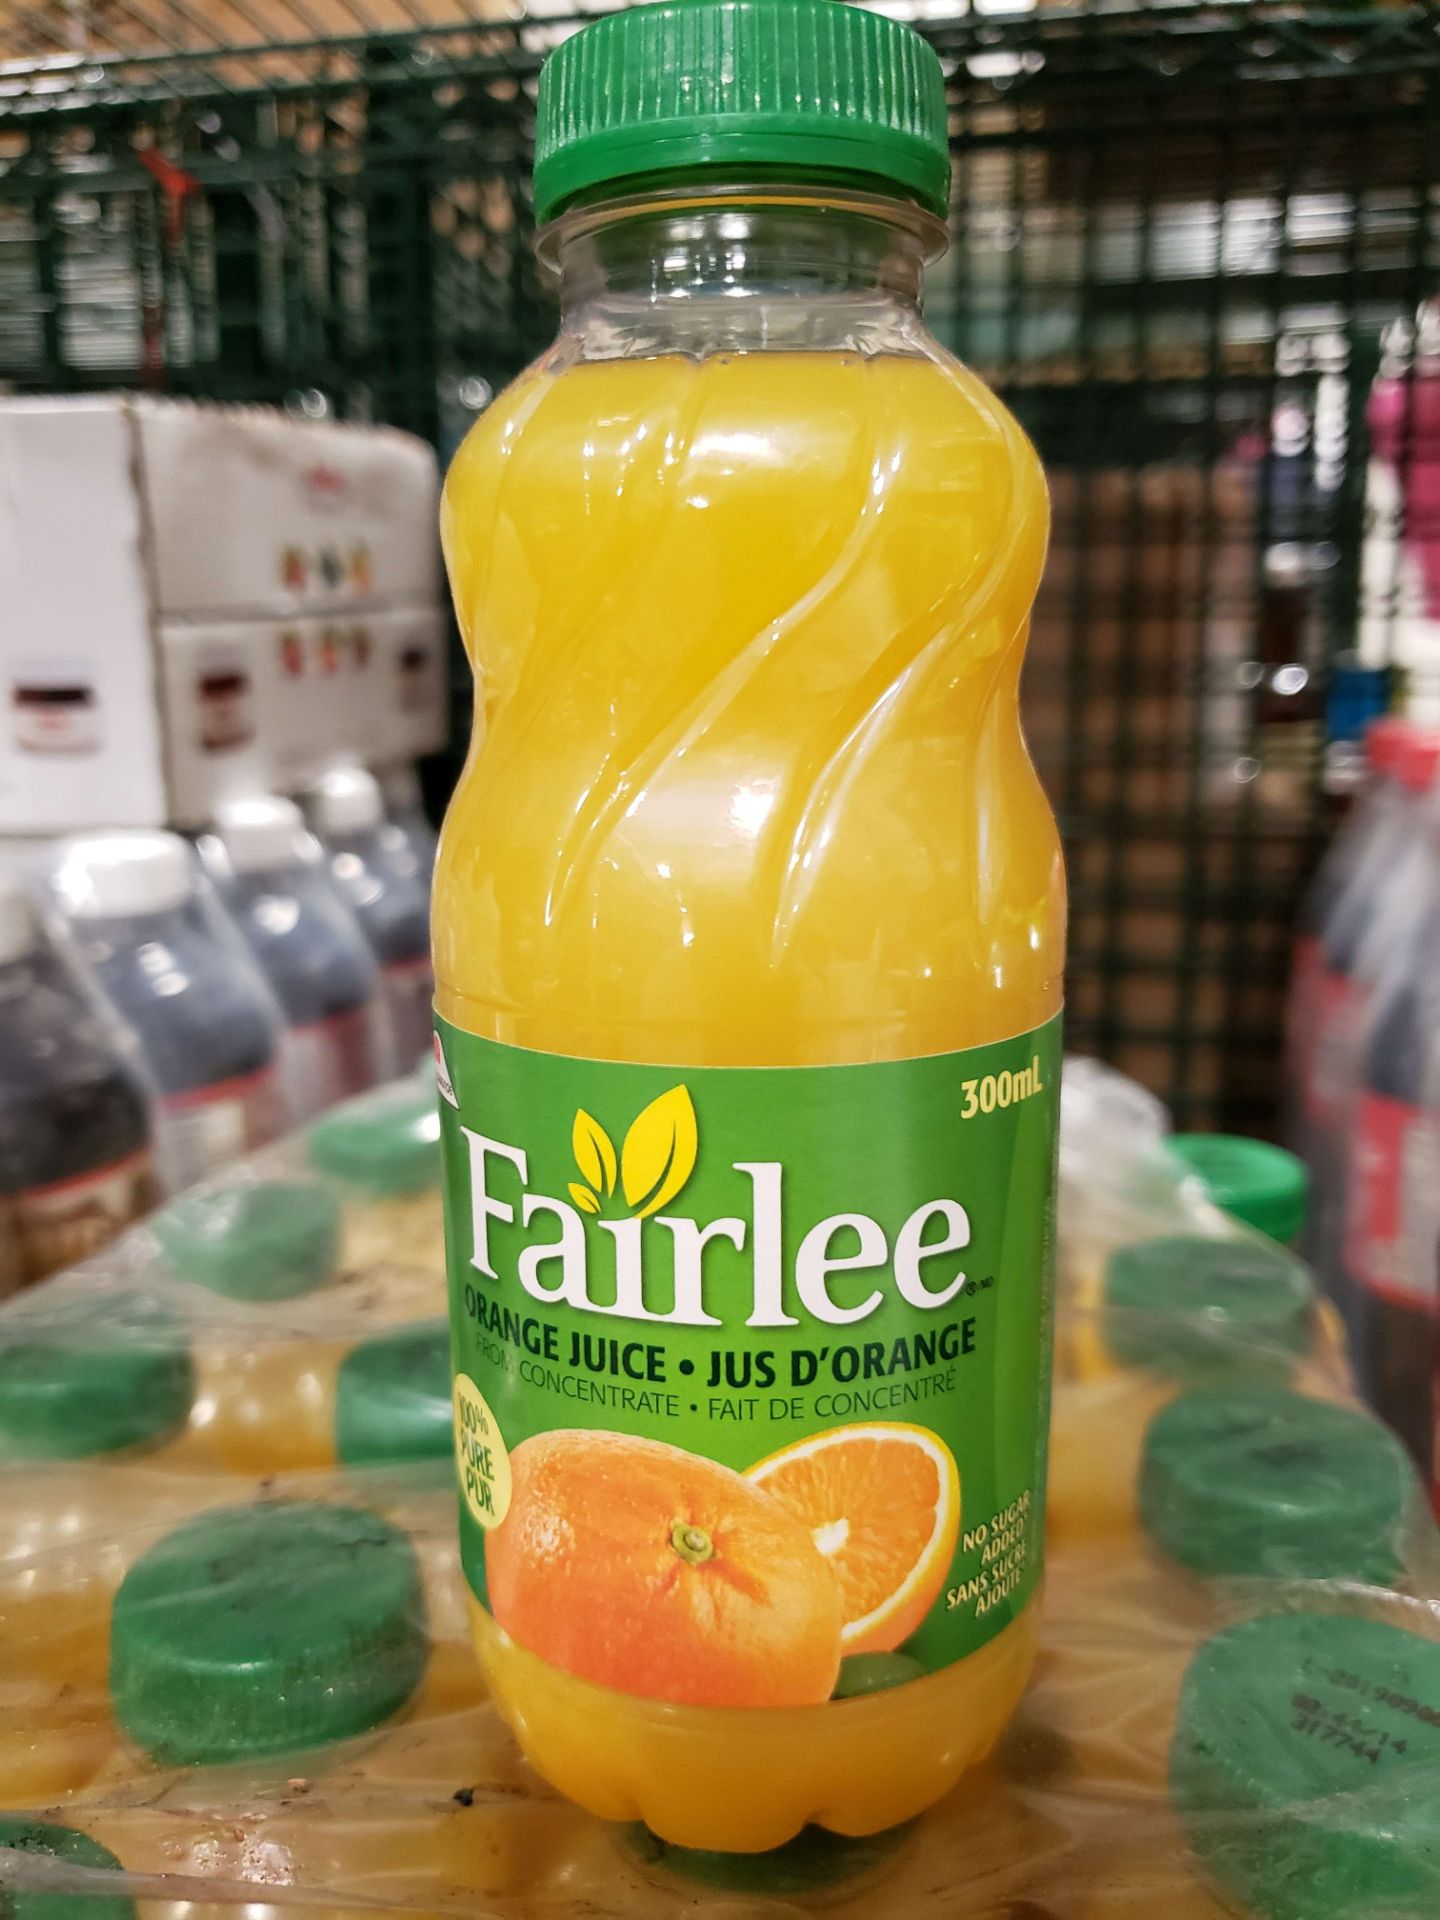 Fairlee Orange Juice - 24 x 330ml Bottles - Image 2 of 2